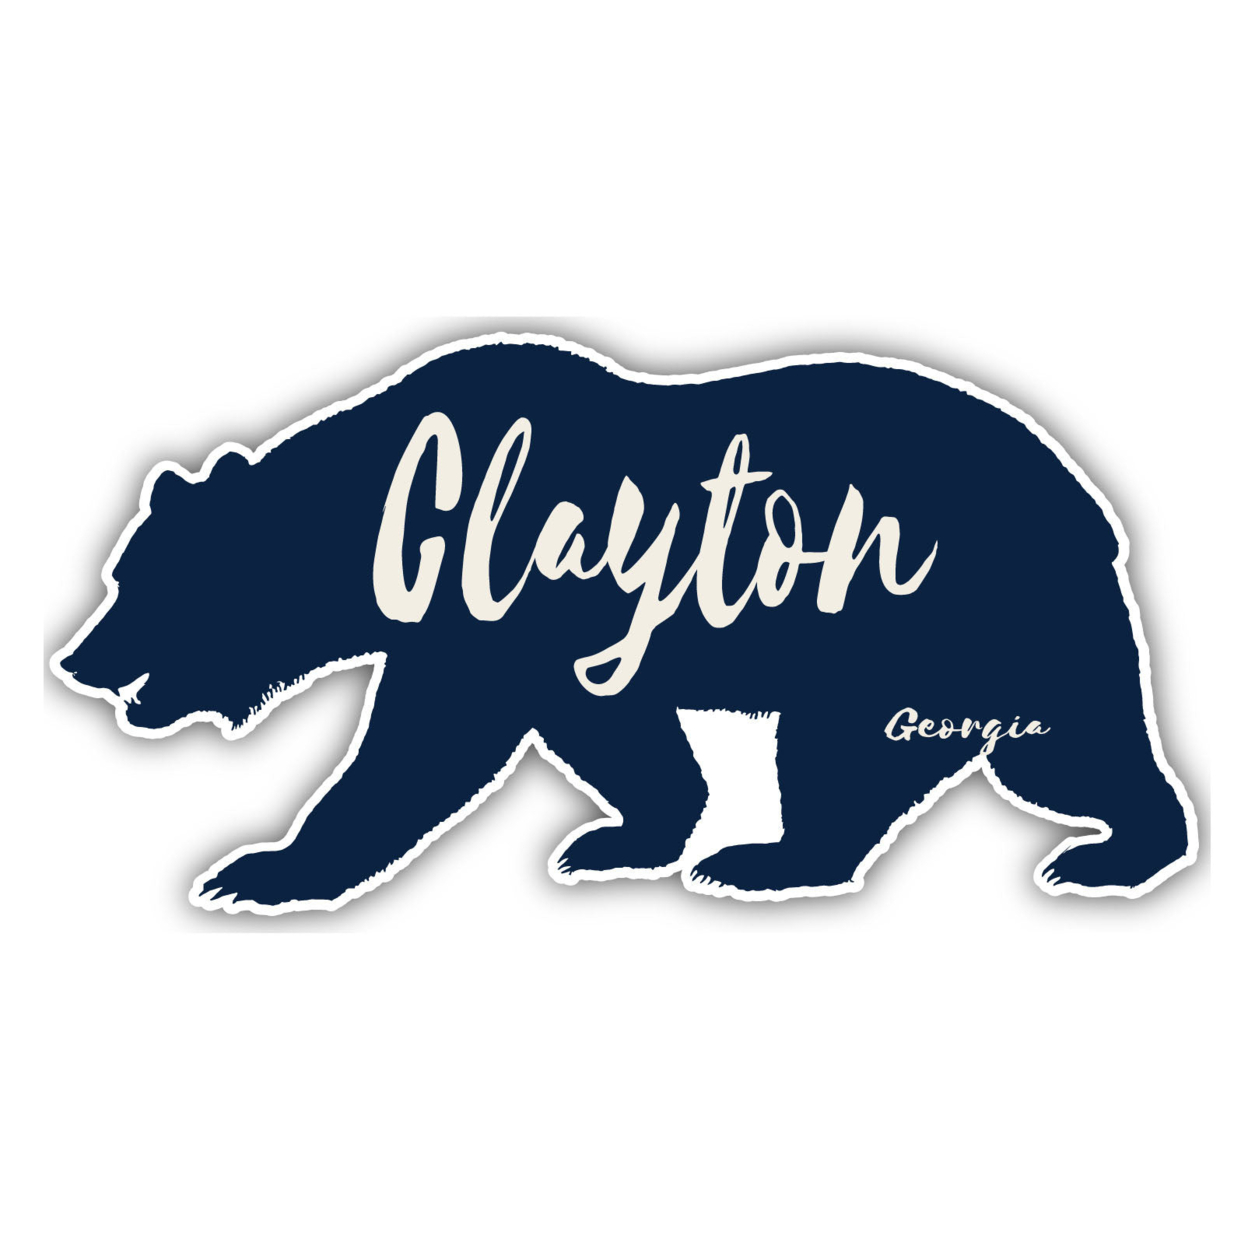 Clayton Georgia Souvenir Decorative Stickers (Choose Theme And Size) - 4-Pack, 8-Inch, Bear